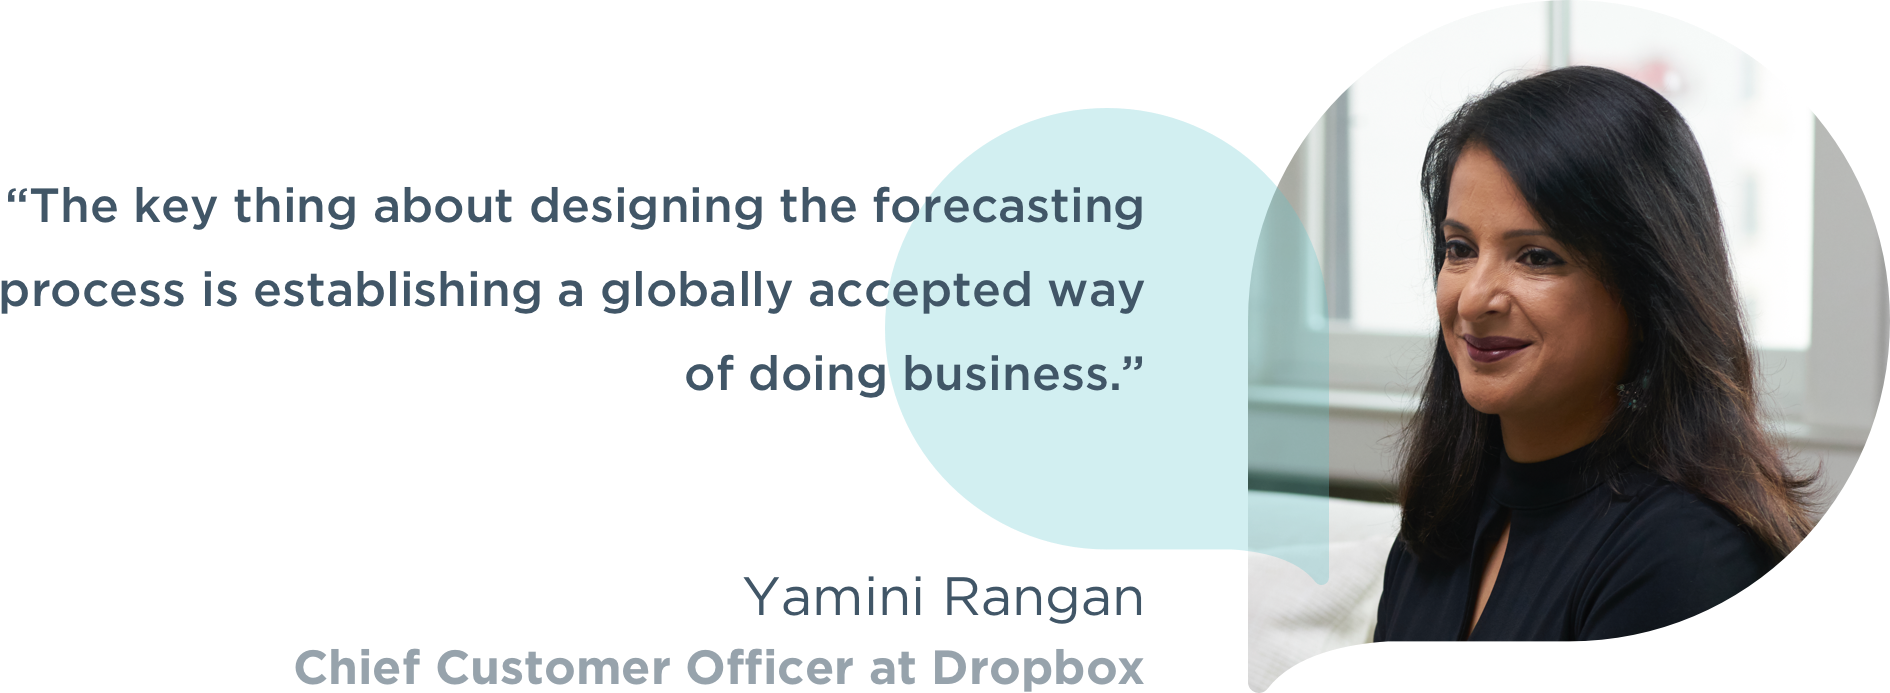 Banner image featuring a quote and headshot photograph of Yamini Rangan, Chief Customer Officer at Dropbox